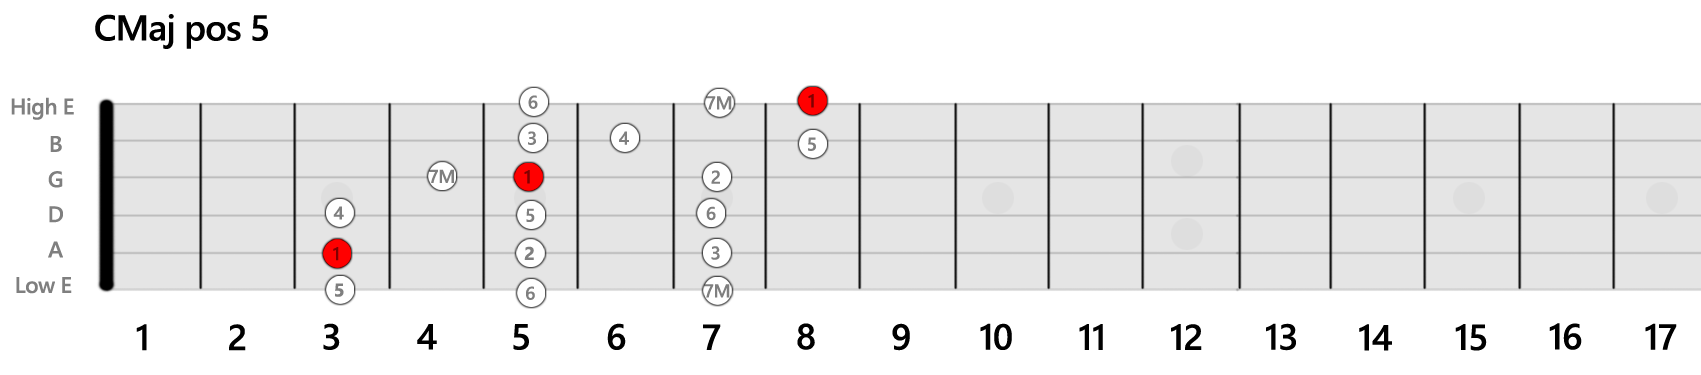 CMaj Position 5 Gamme Guitare